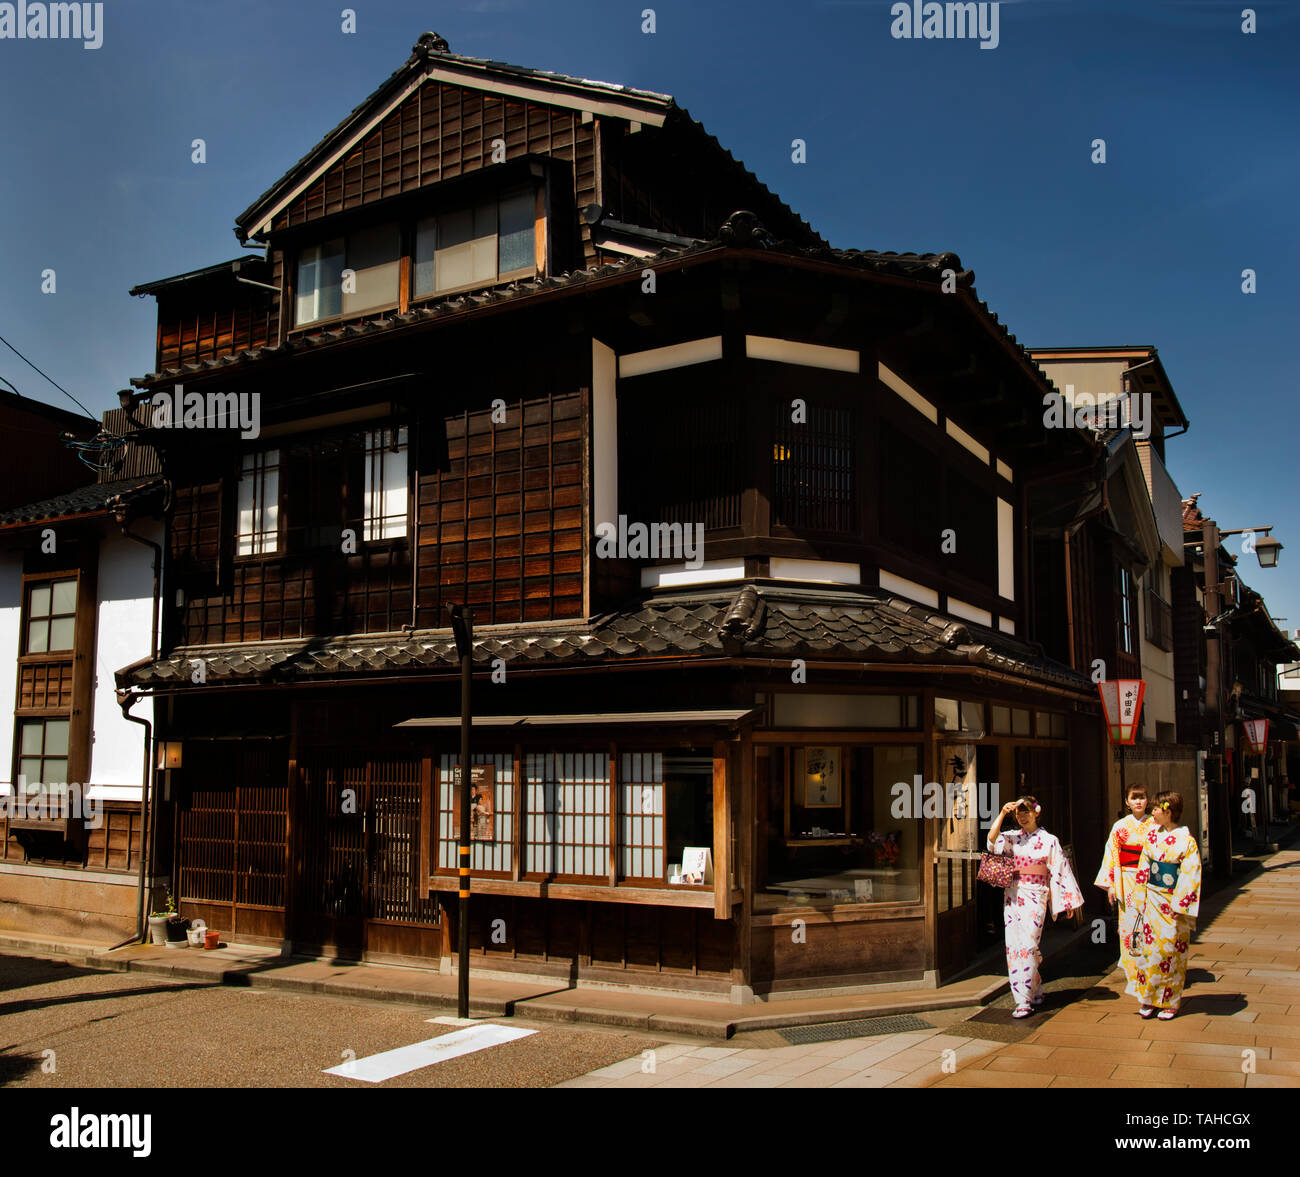 Asien, Japan, Präfektur Ishikawa, Kanazawa (金沢), Kanazawa Geisha District, traditionellen Teehaus mit Geisha girls Stockfoto